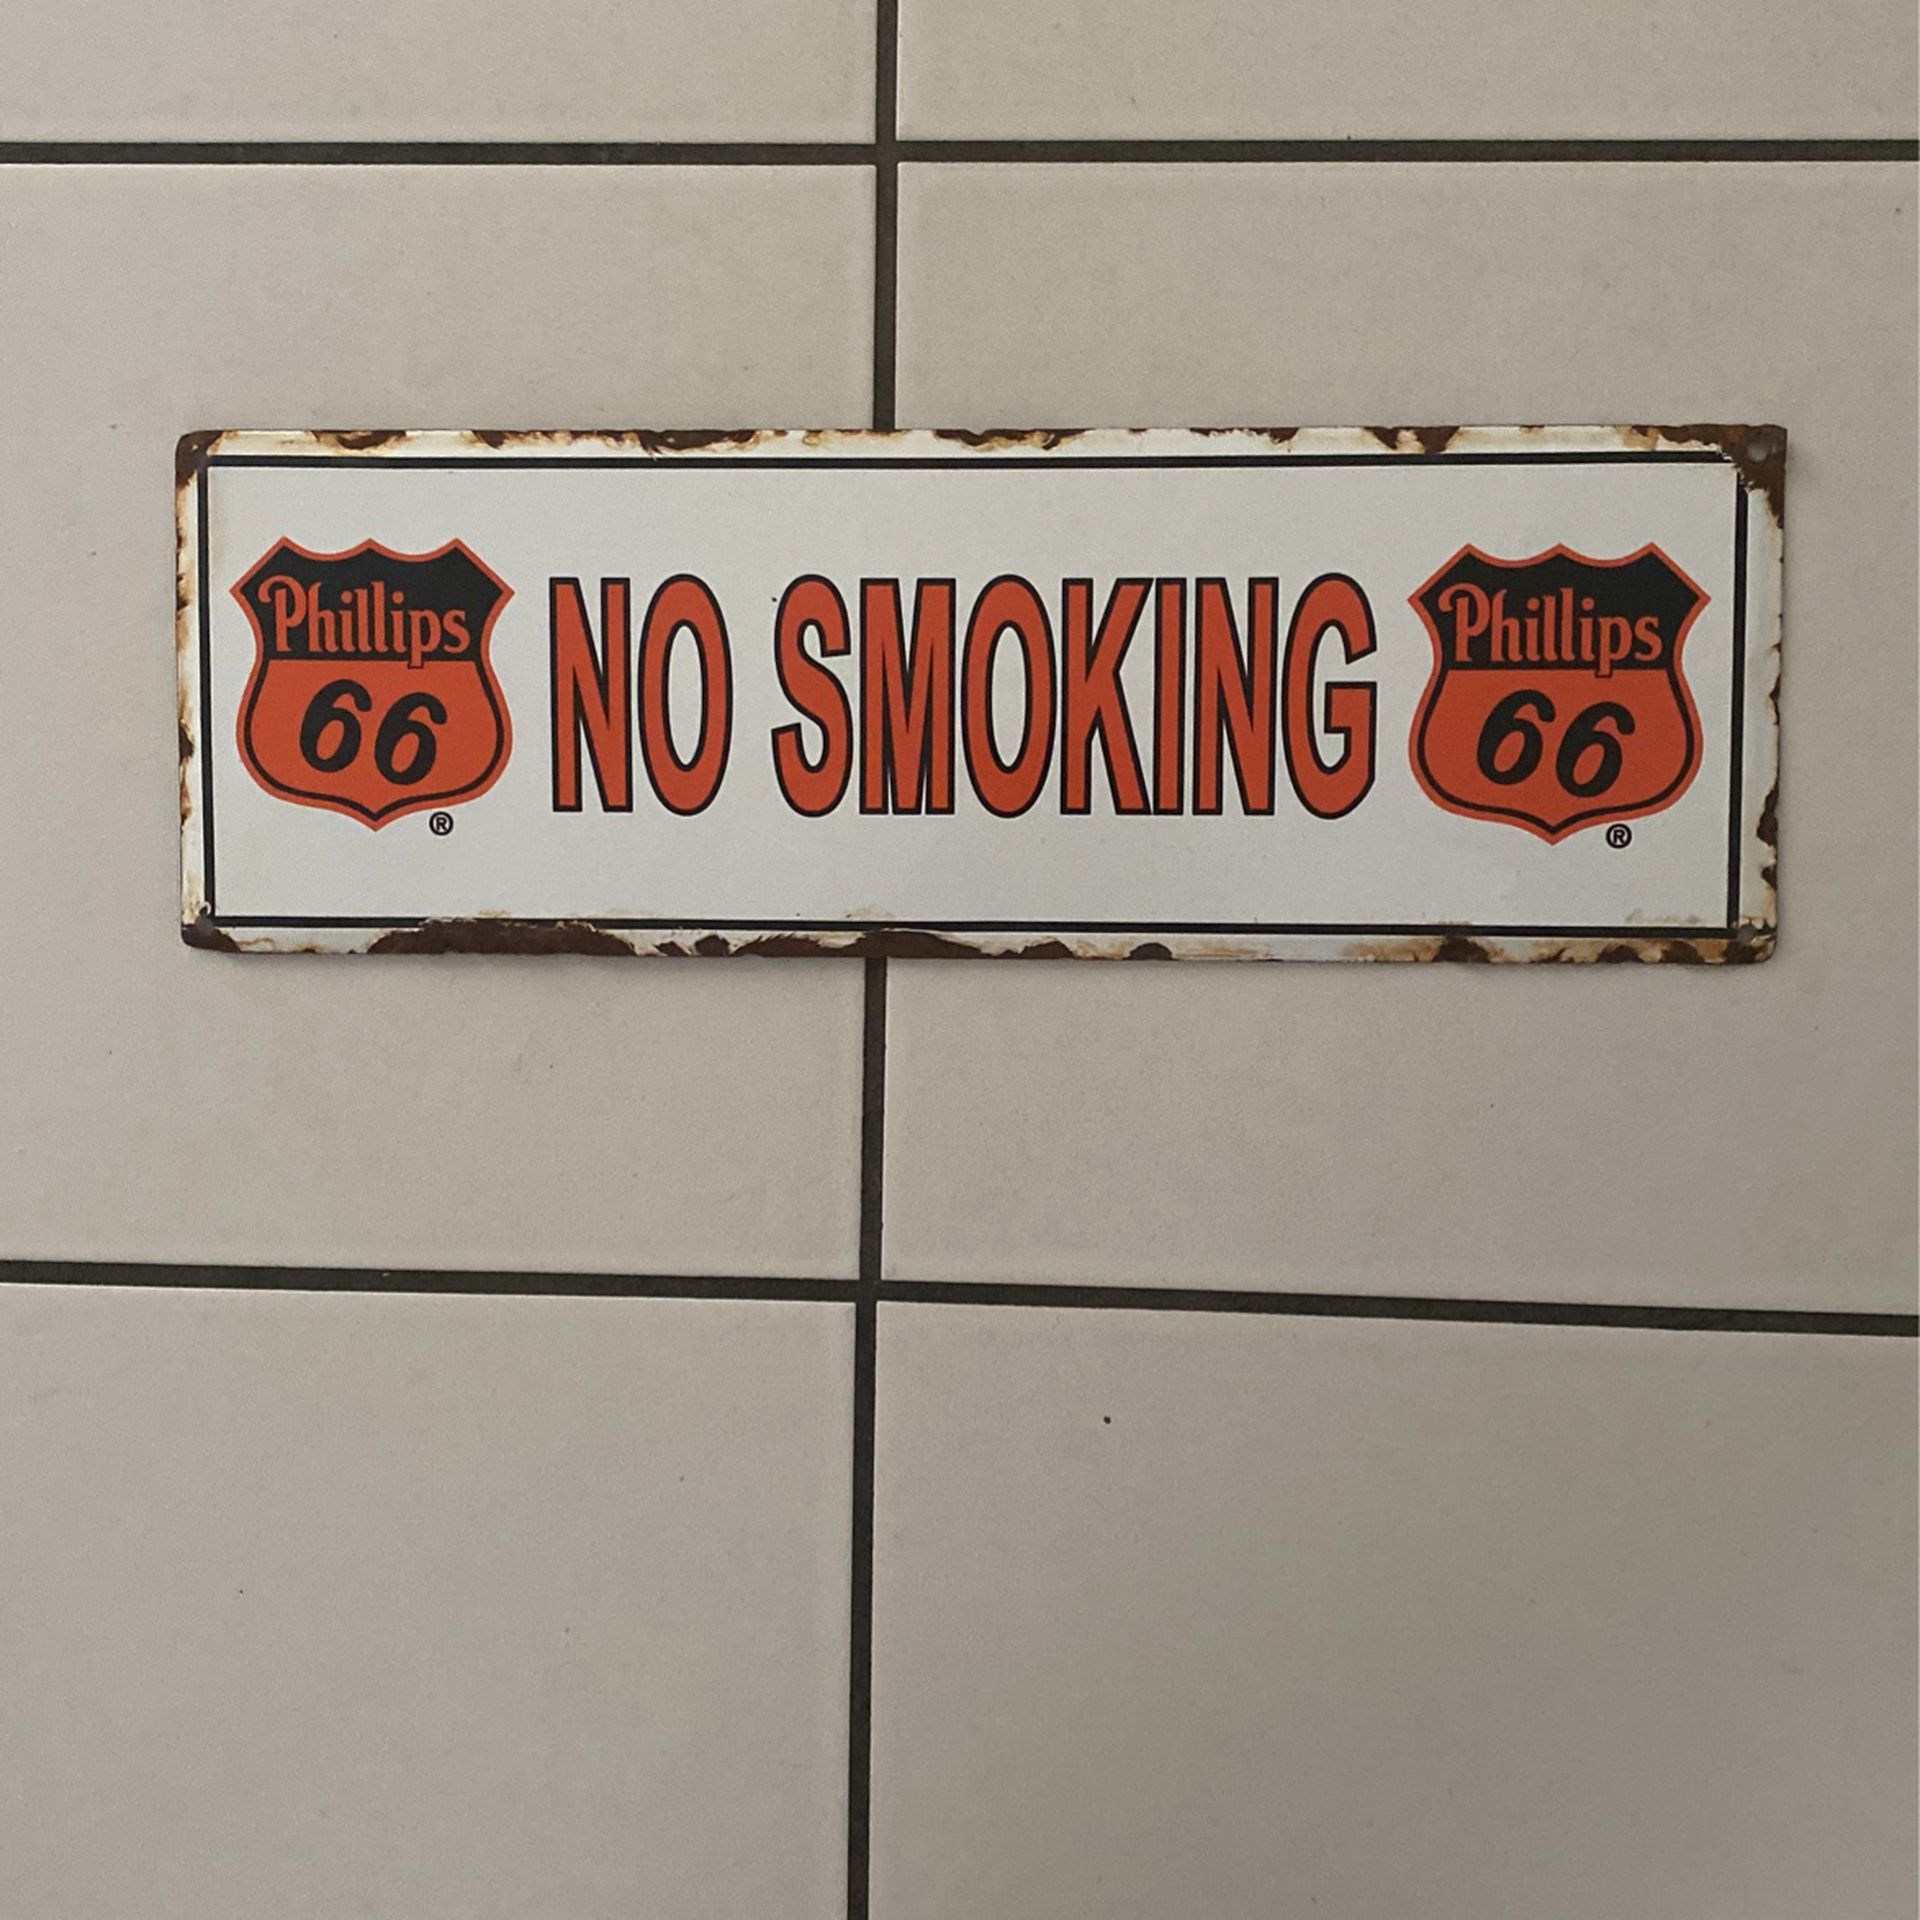 Phillips 66 No Smoking